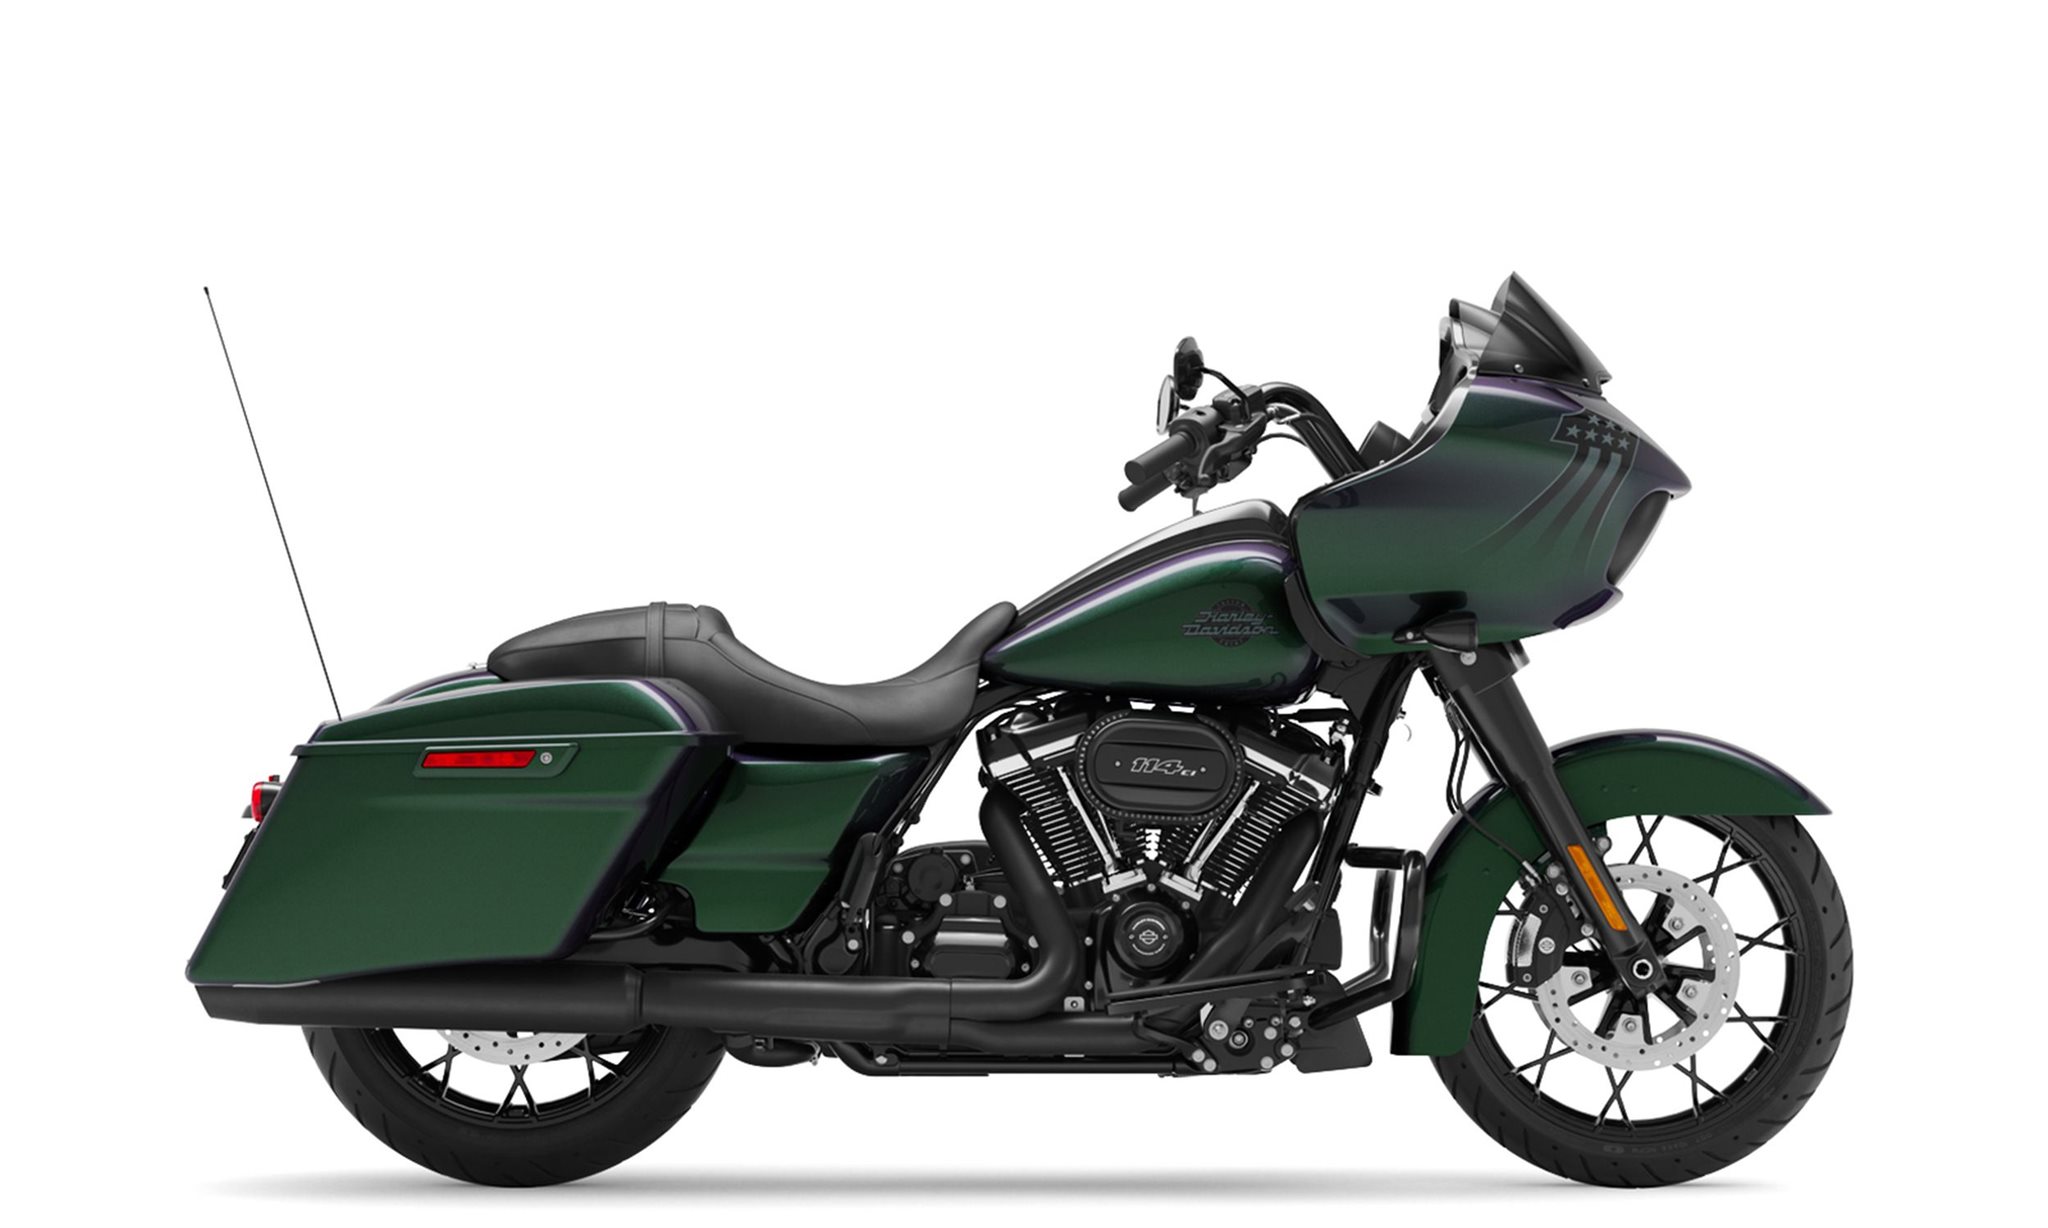 Motorrad Vergleich Harley Davidson Touring Road Glide Special Fltrxs 2021 Vs Harley Davidson Street Glide Flhx 2020